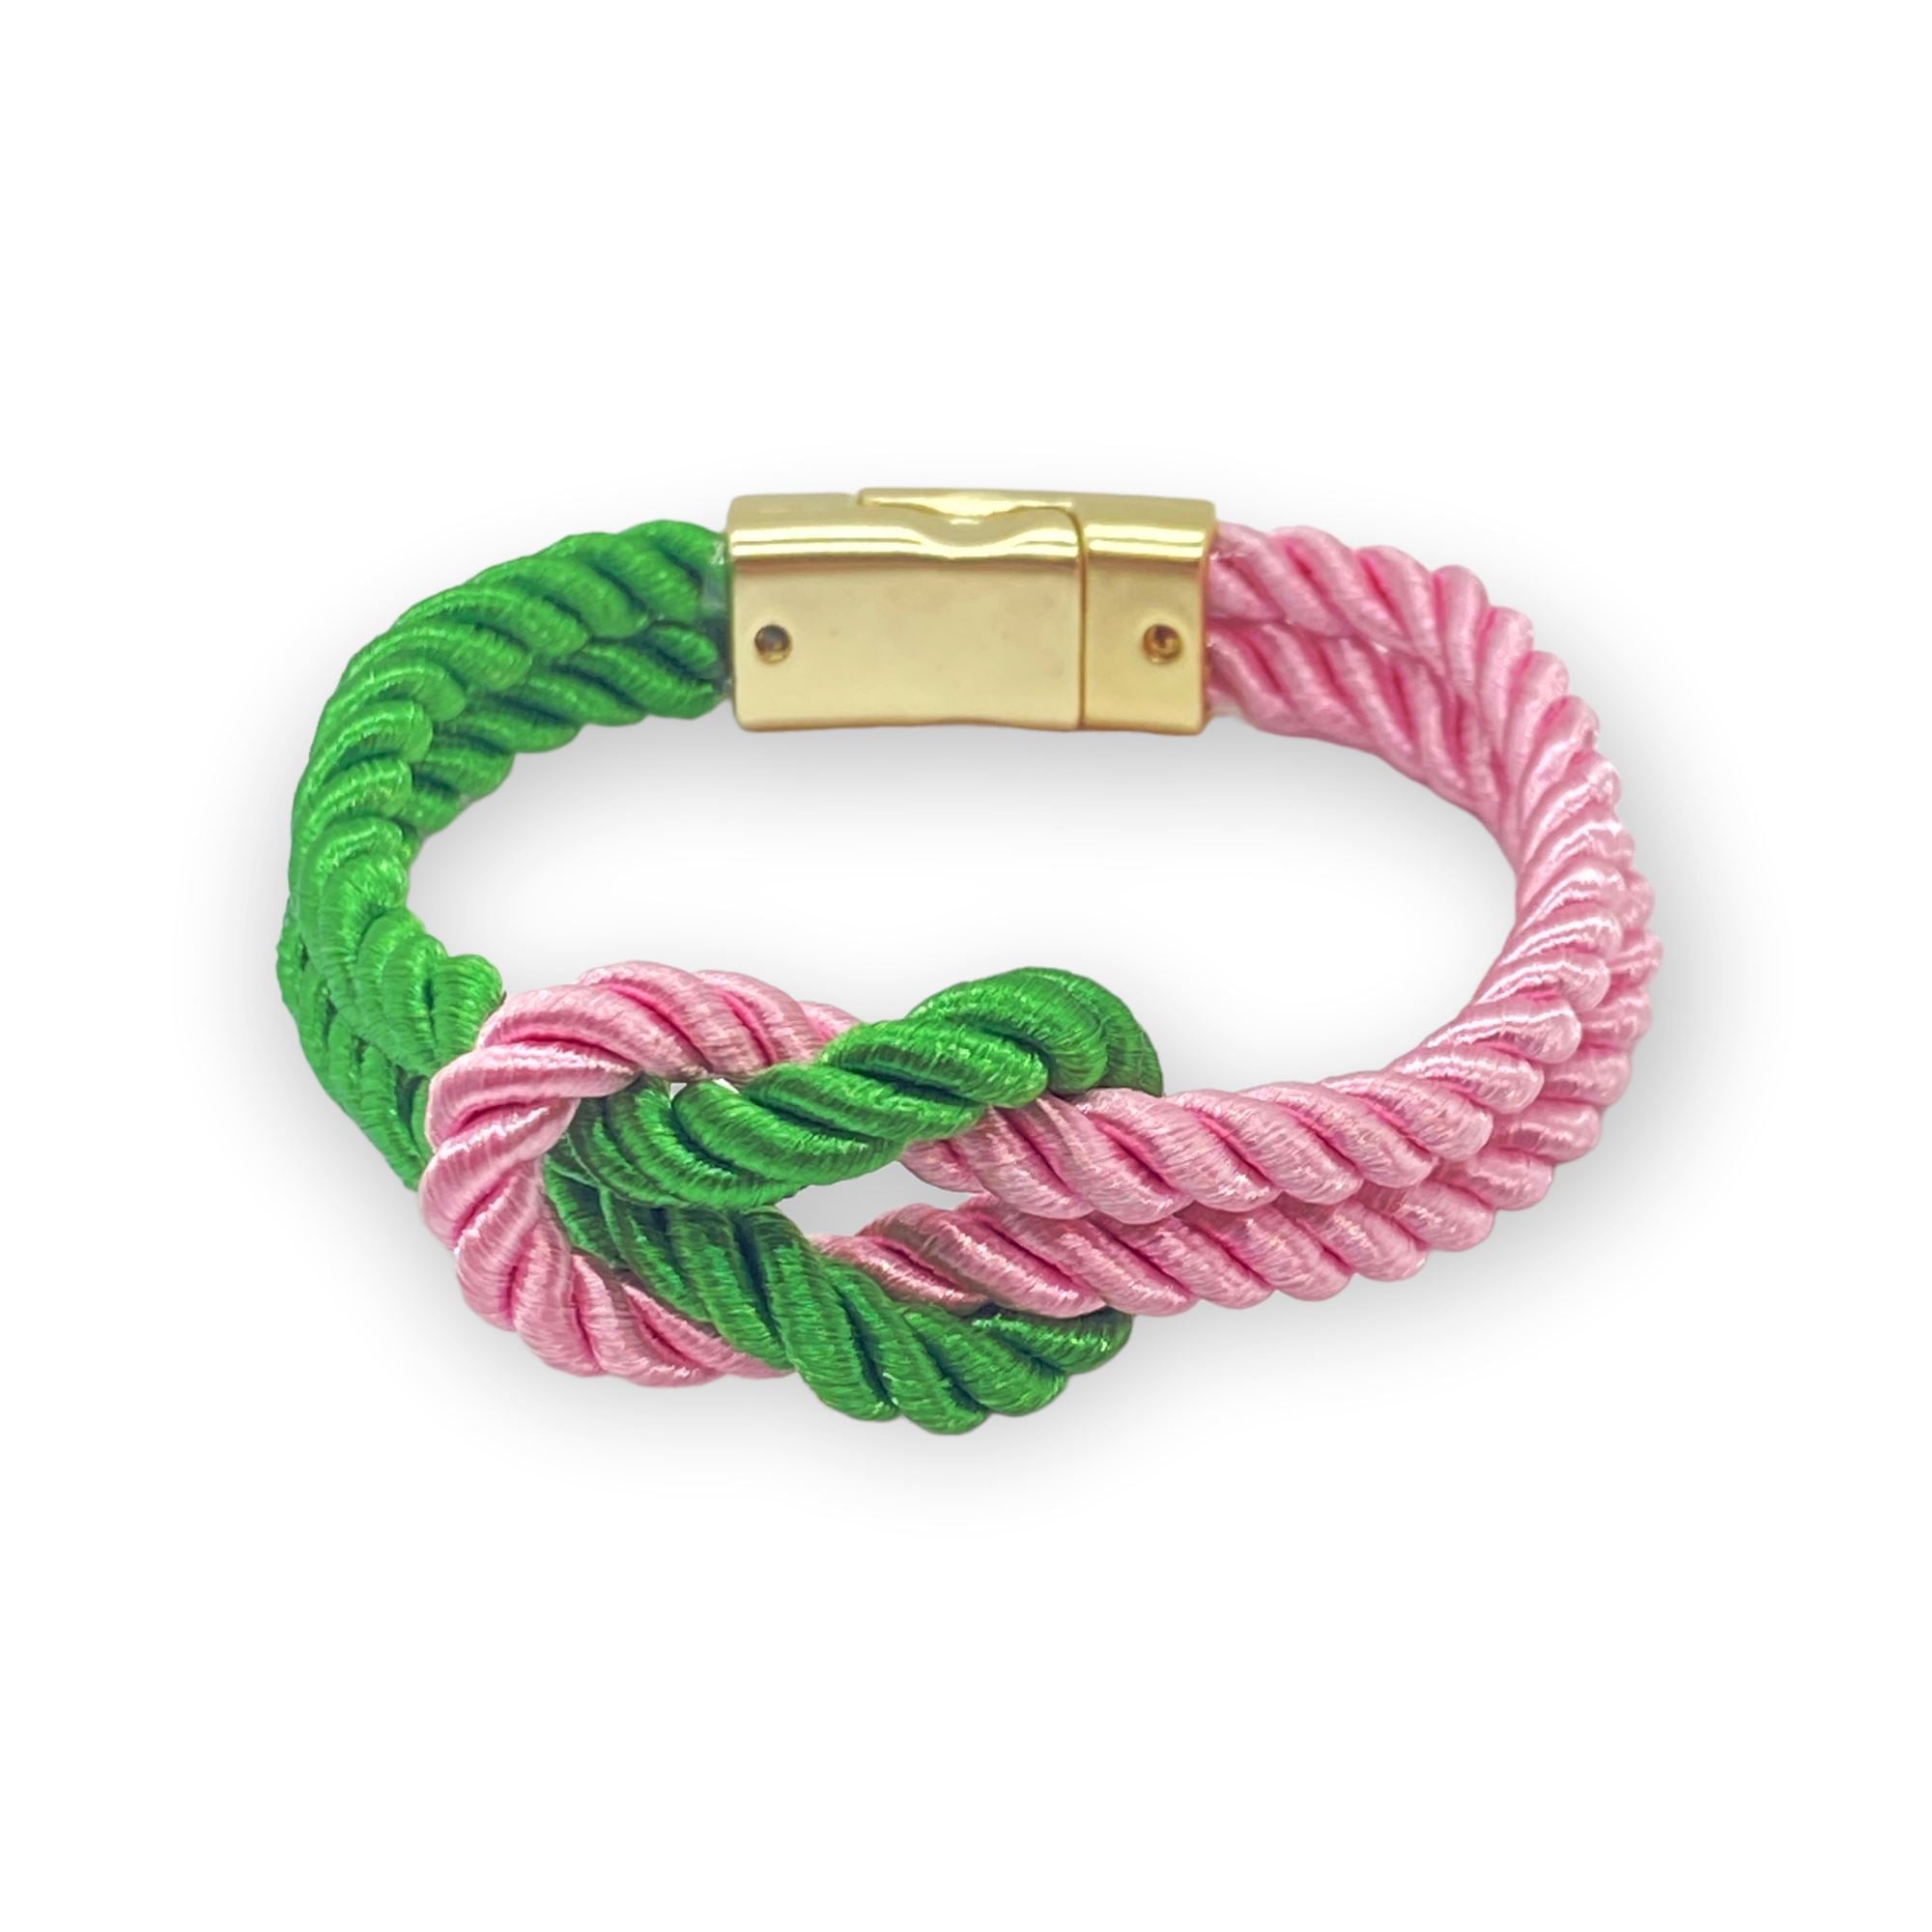 The Original Love Knot Satin Rope Bracelet Bracelets Trendzio Pink and Green 